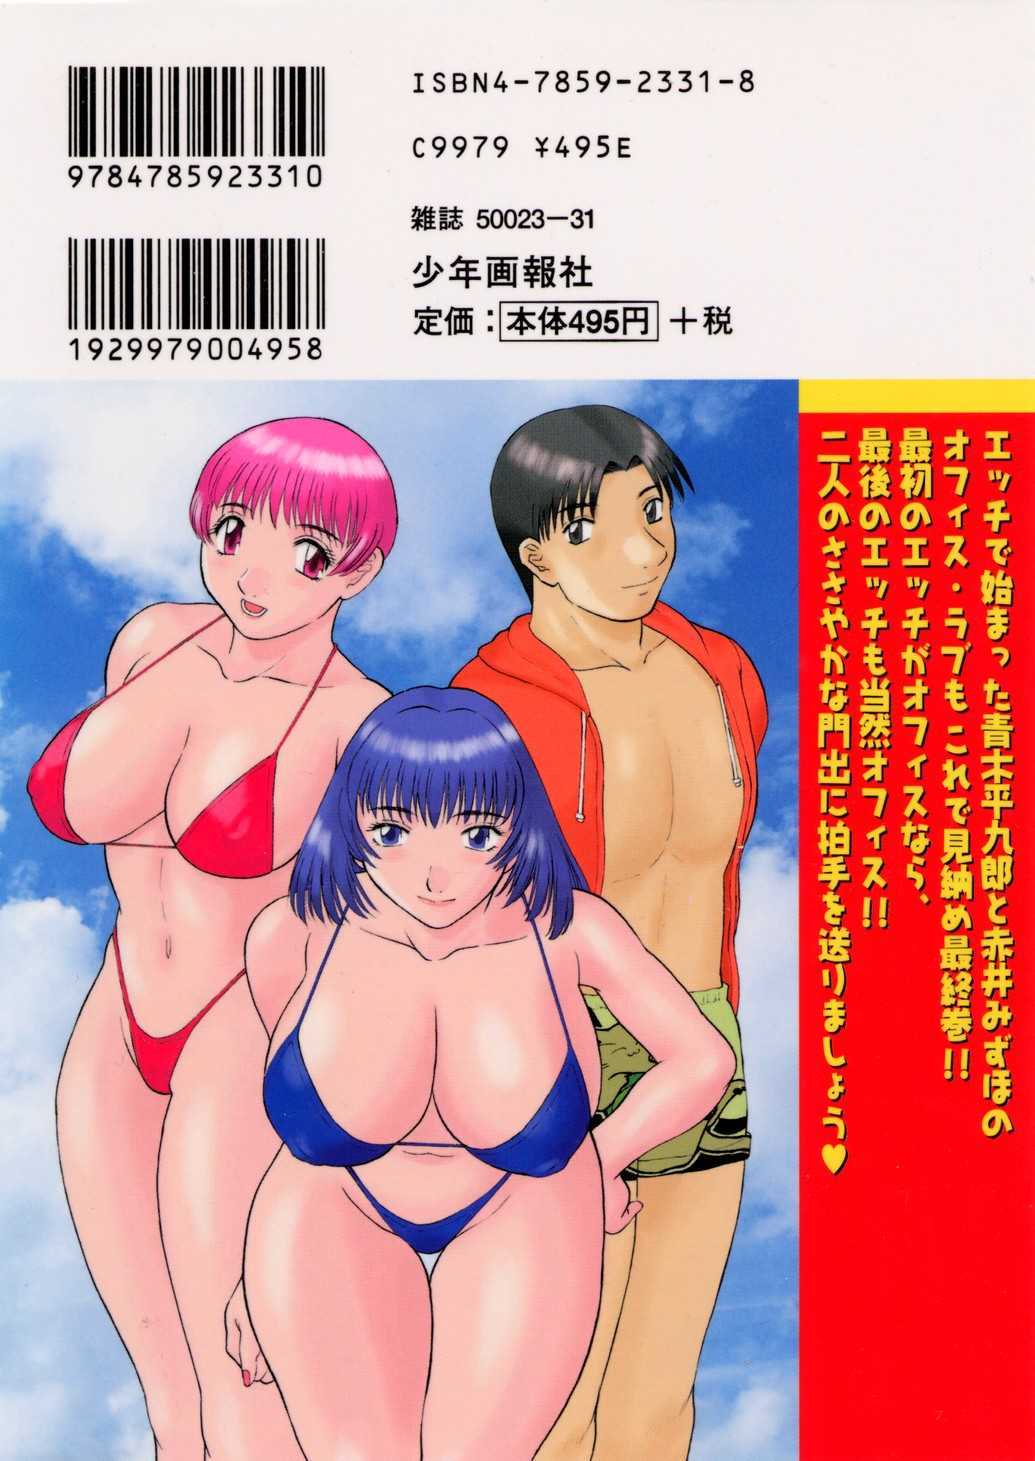 Kawamori Misaki - H ni Kiss Shite Vol 6 